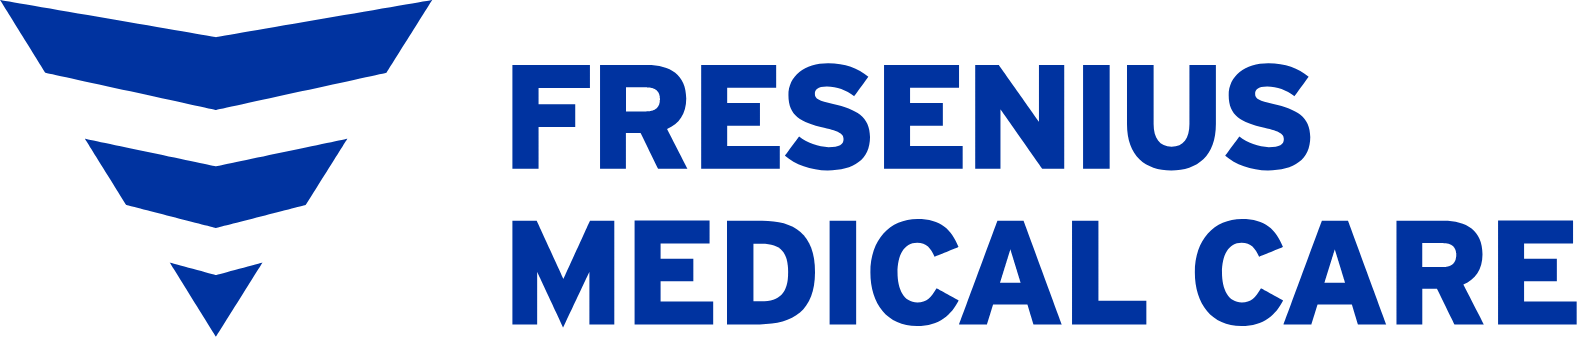 Fresenius Medical Care logo large (transparent PNG)